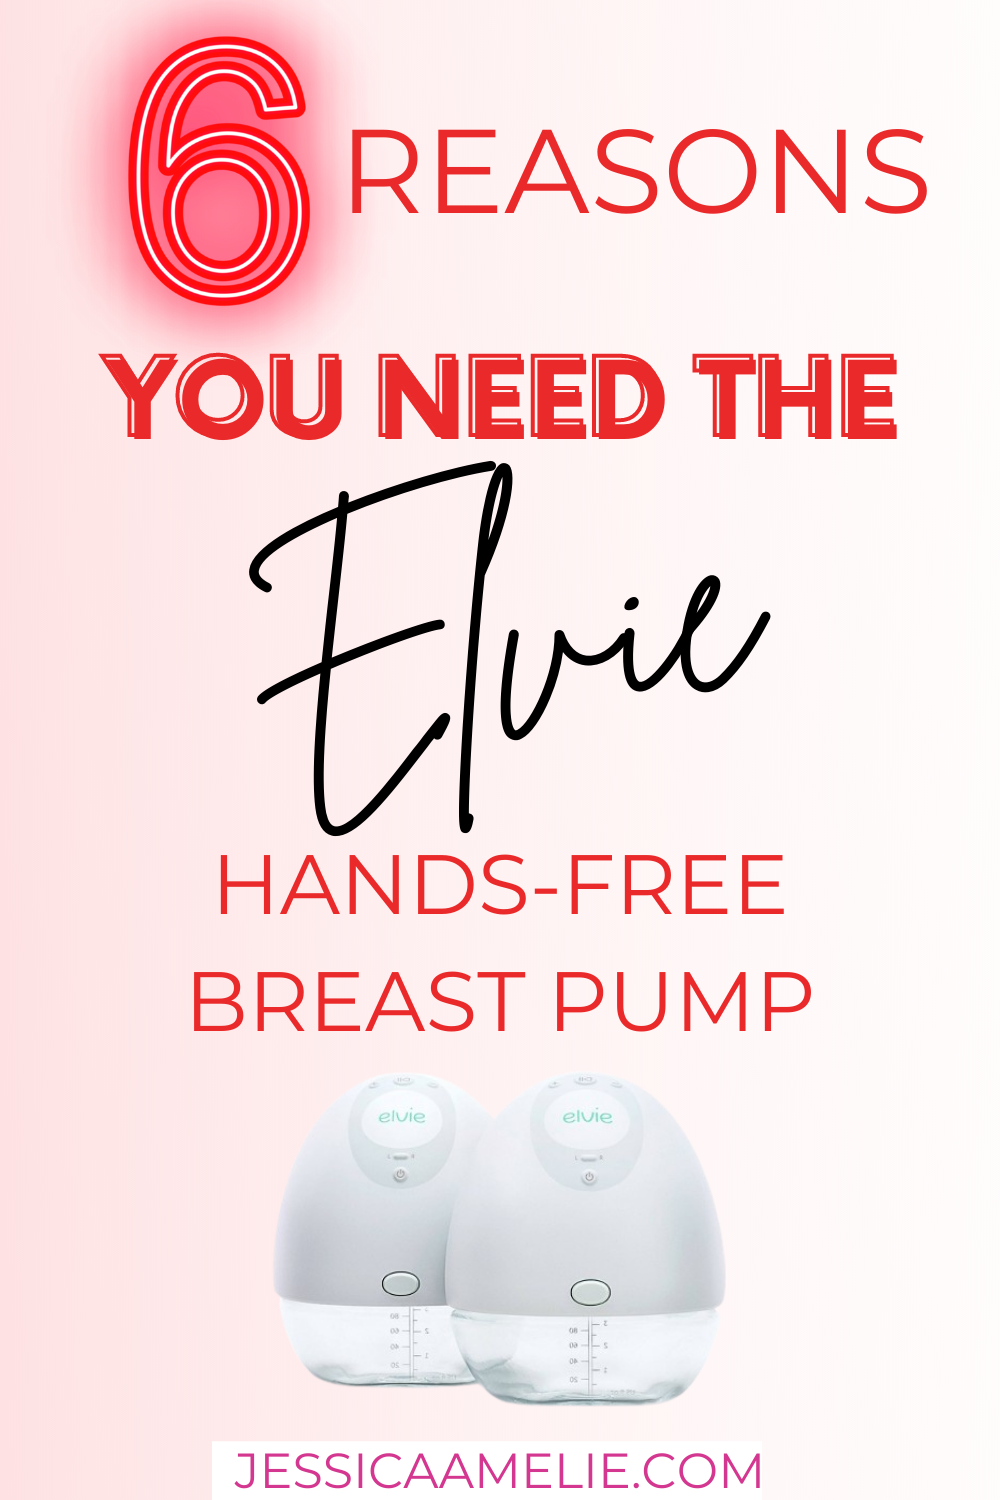 6 Reasons You Need the Elvie Breast Pump